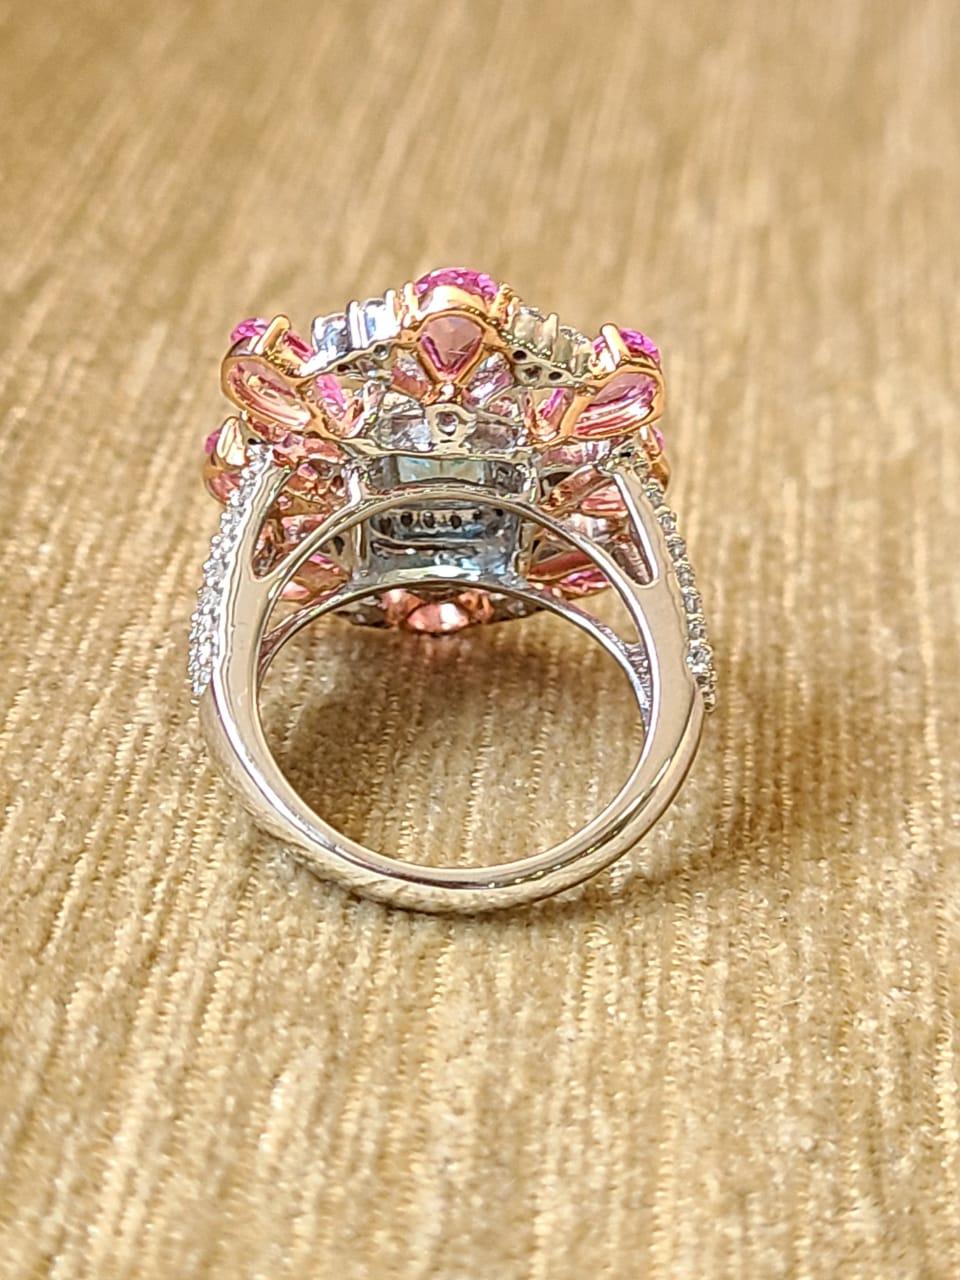 Modern Natural Aquamarine, Pink Sapphires & Diamonds Cocktail Ring Set in 18K Gold